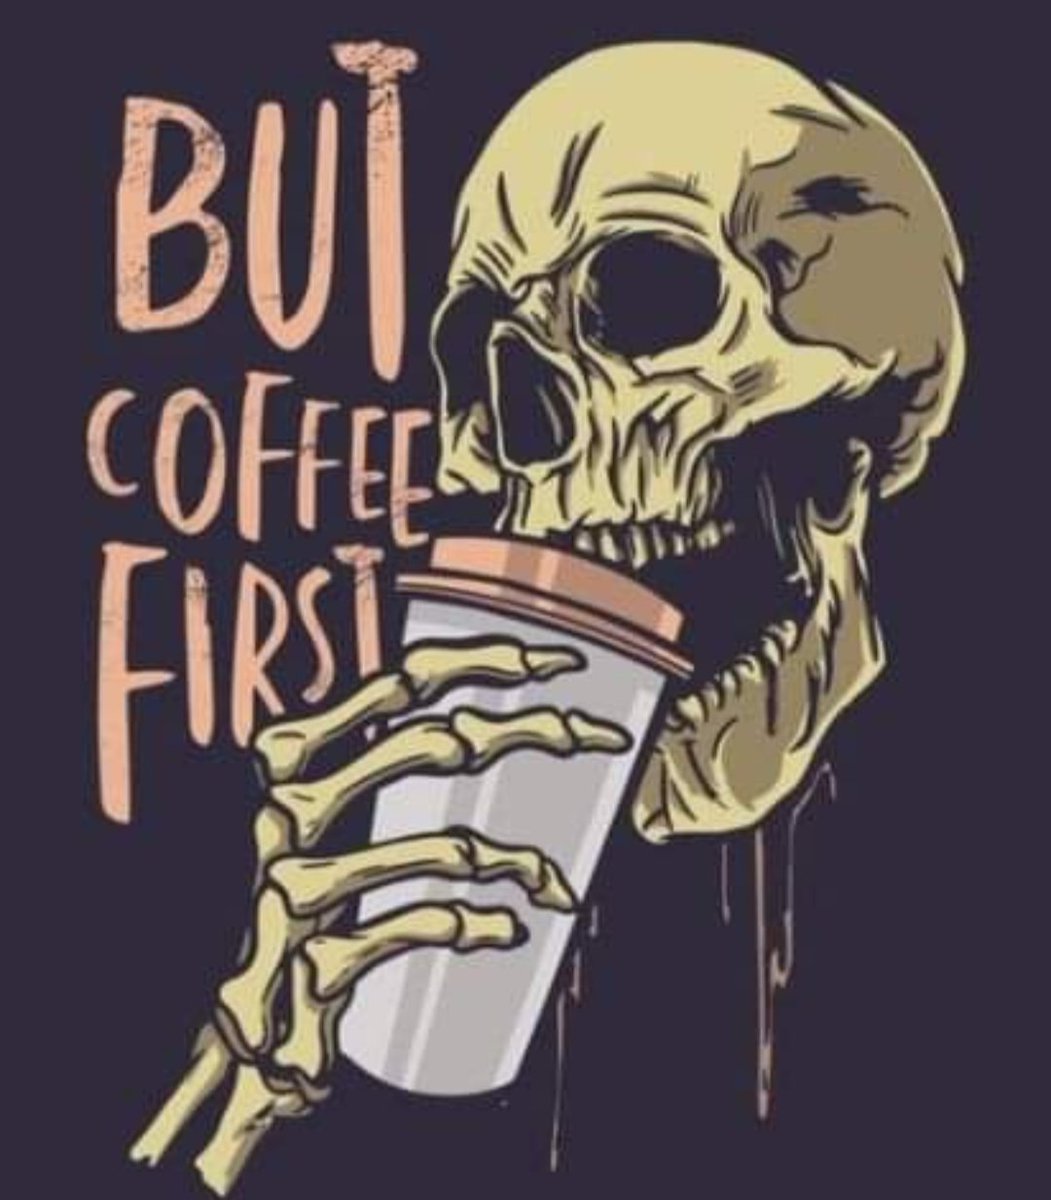 #HorrorFamily #coffee  #HorrorFamily4Life #HorrorCommunity 

Good morning/afternoonm
Happy Sunday.